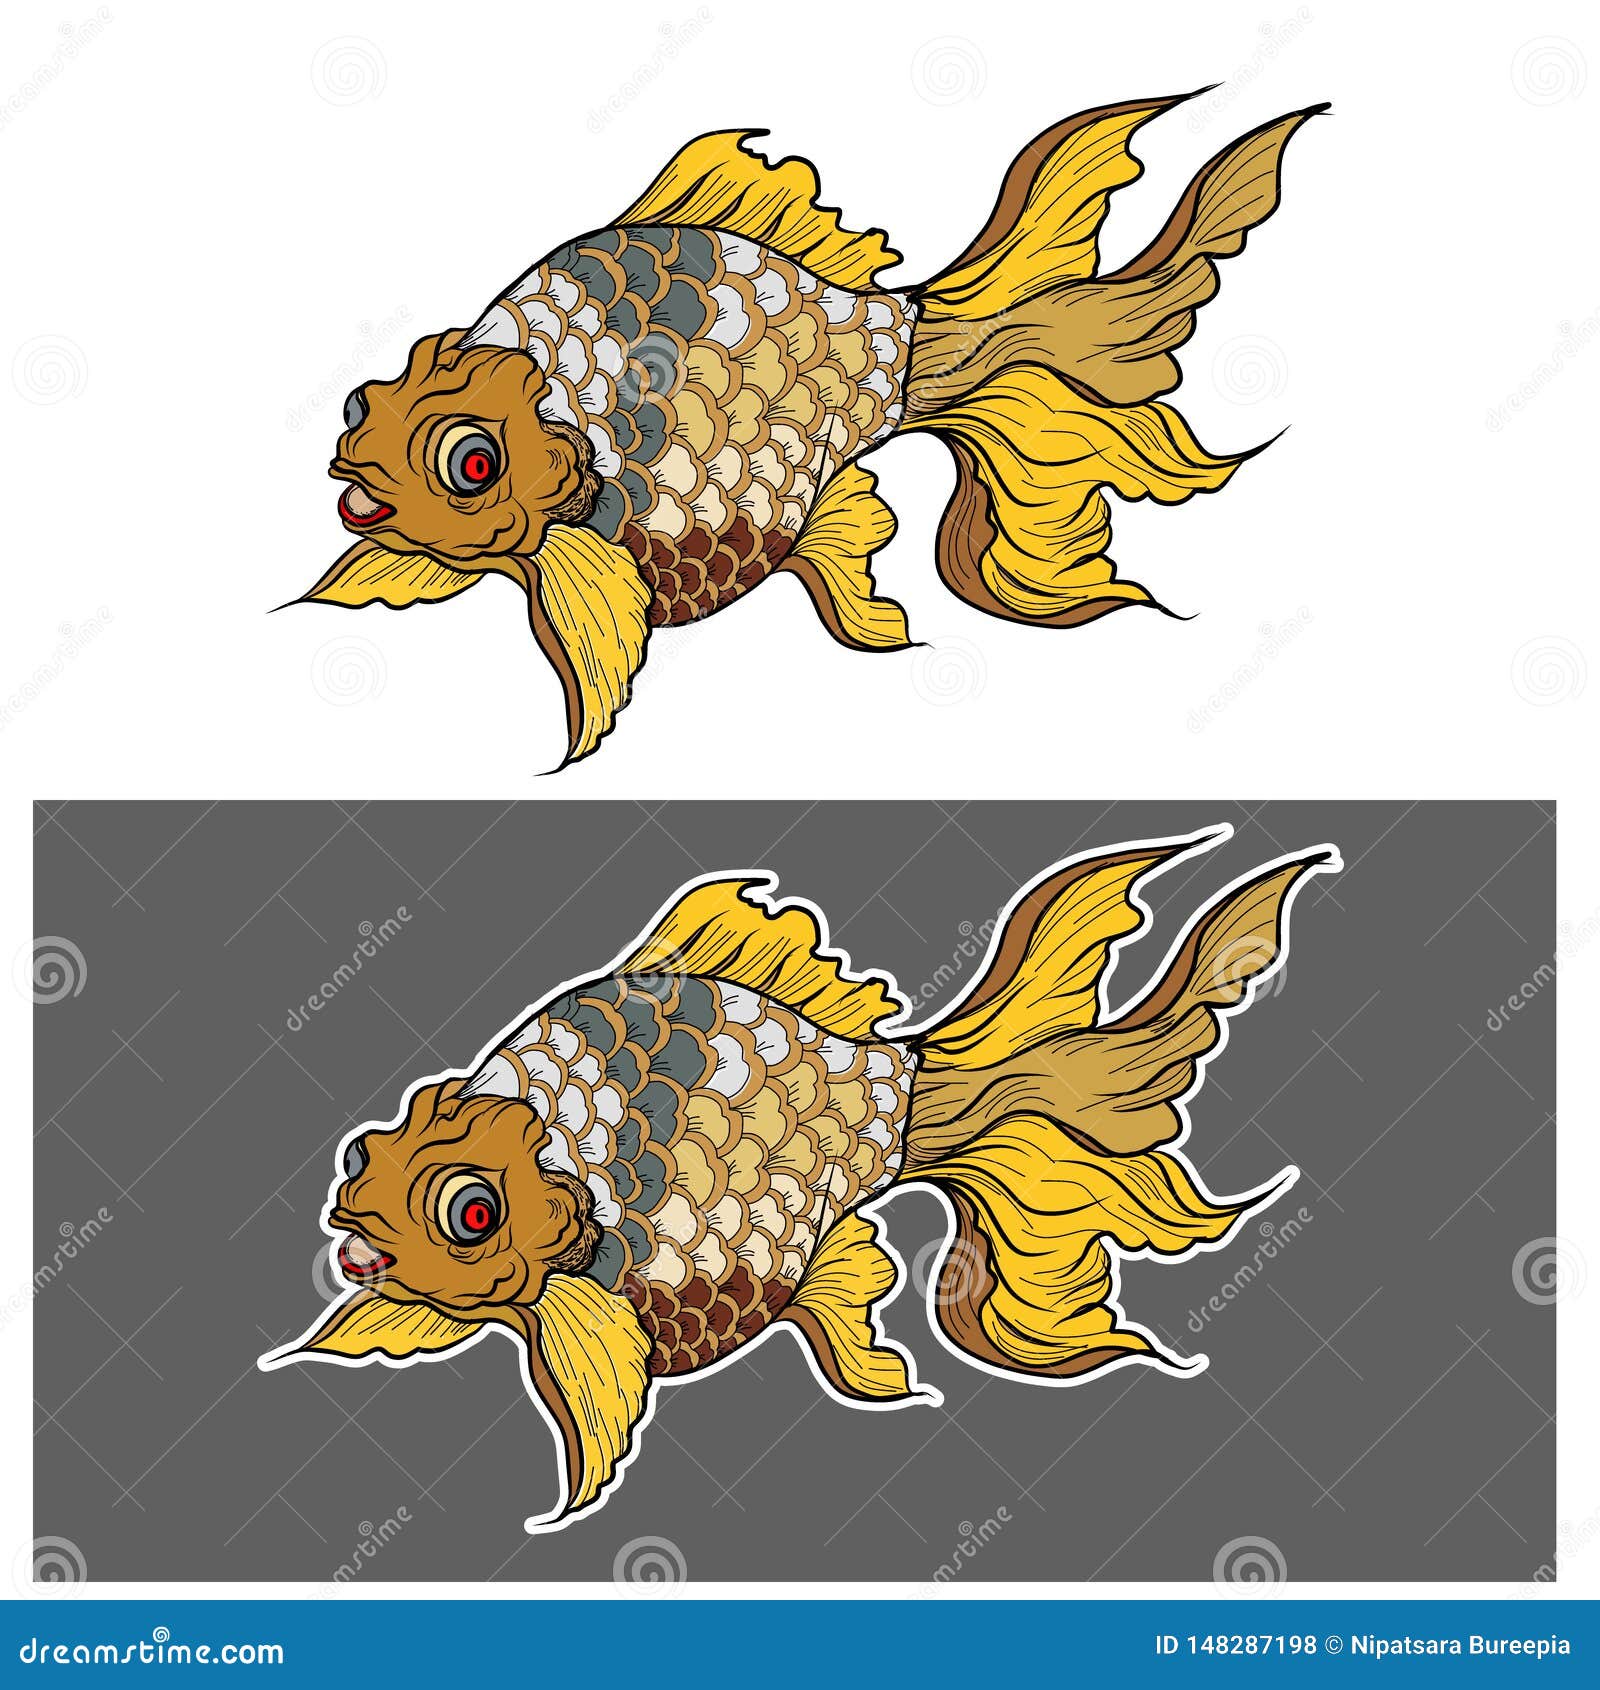 goldfish temporary tattoo body tattoo art | eBay